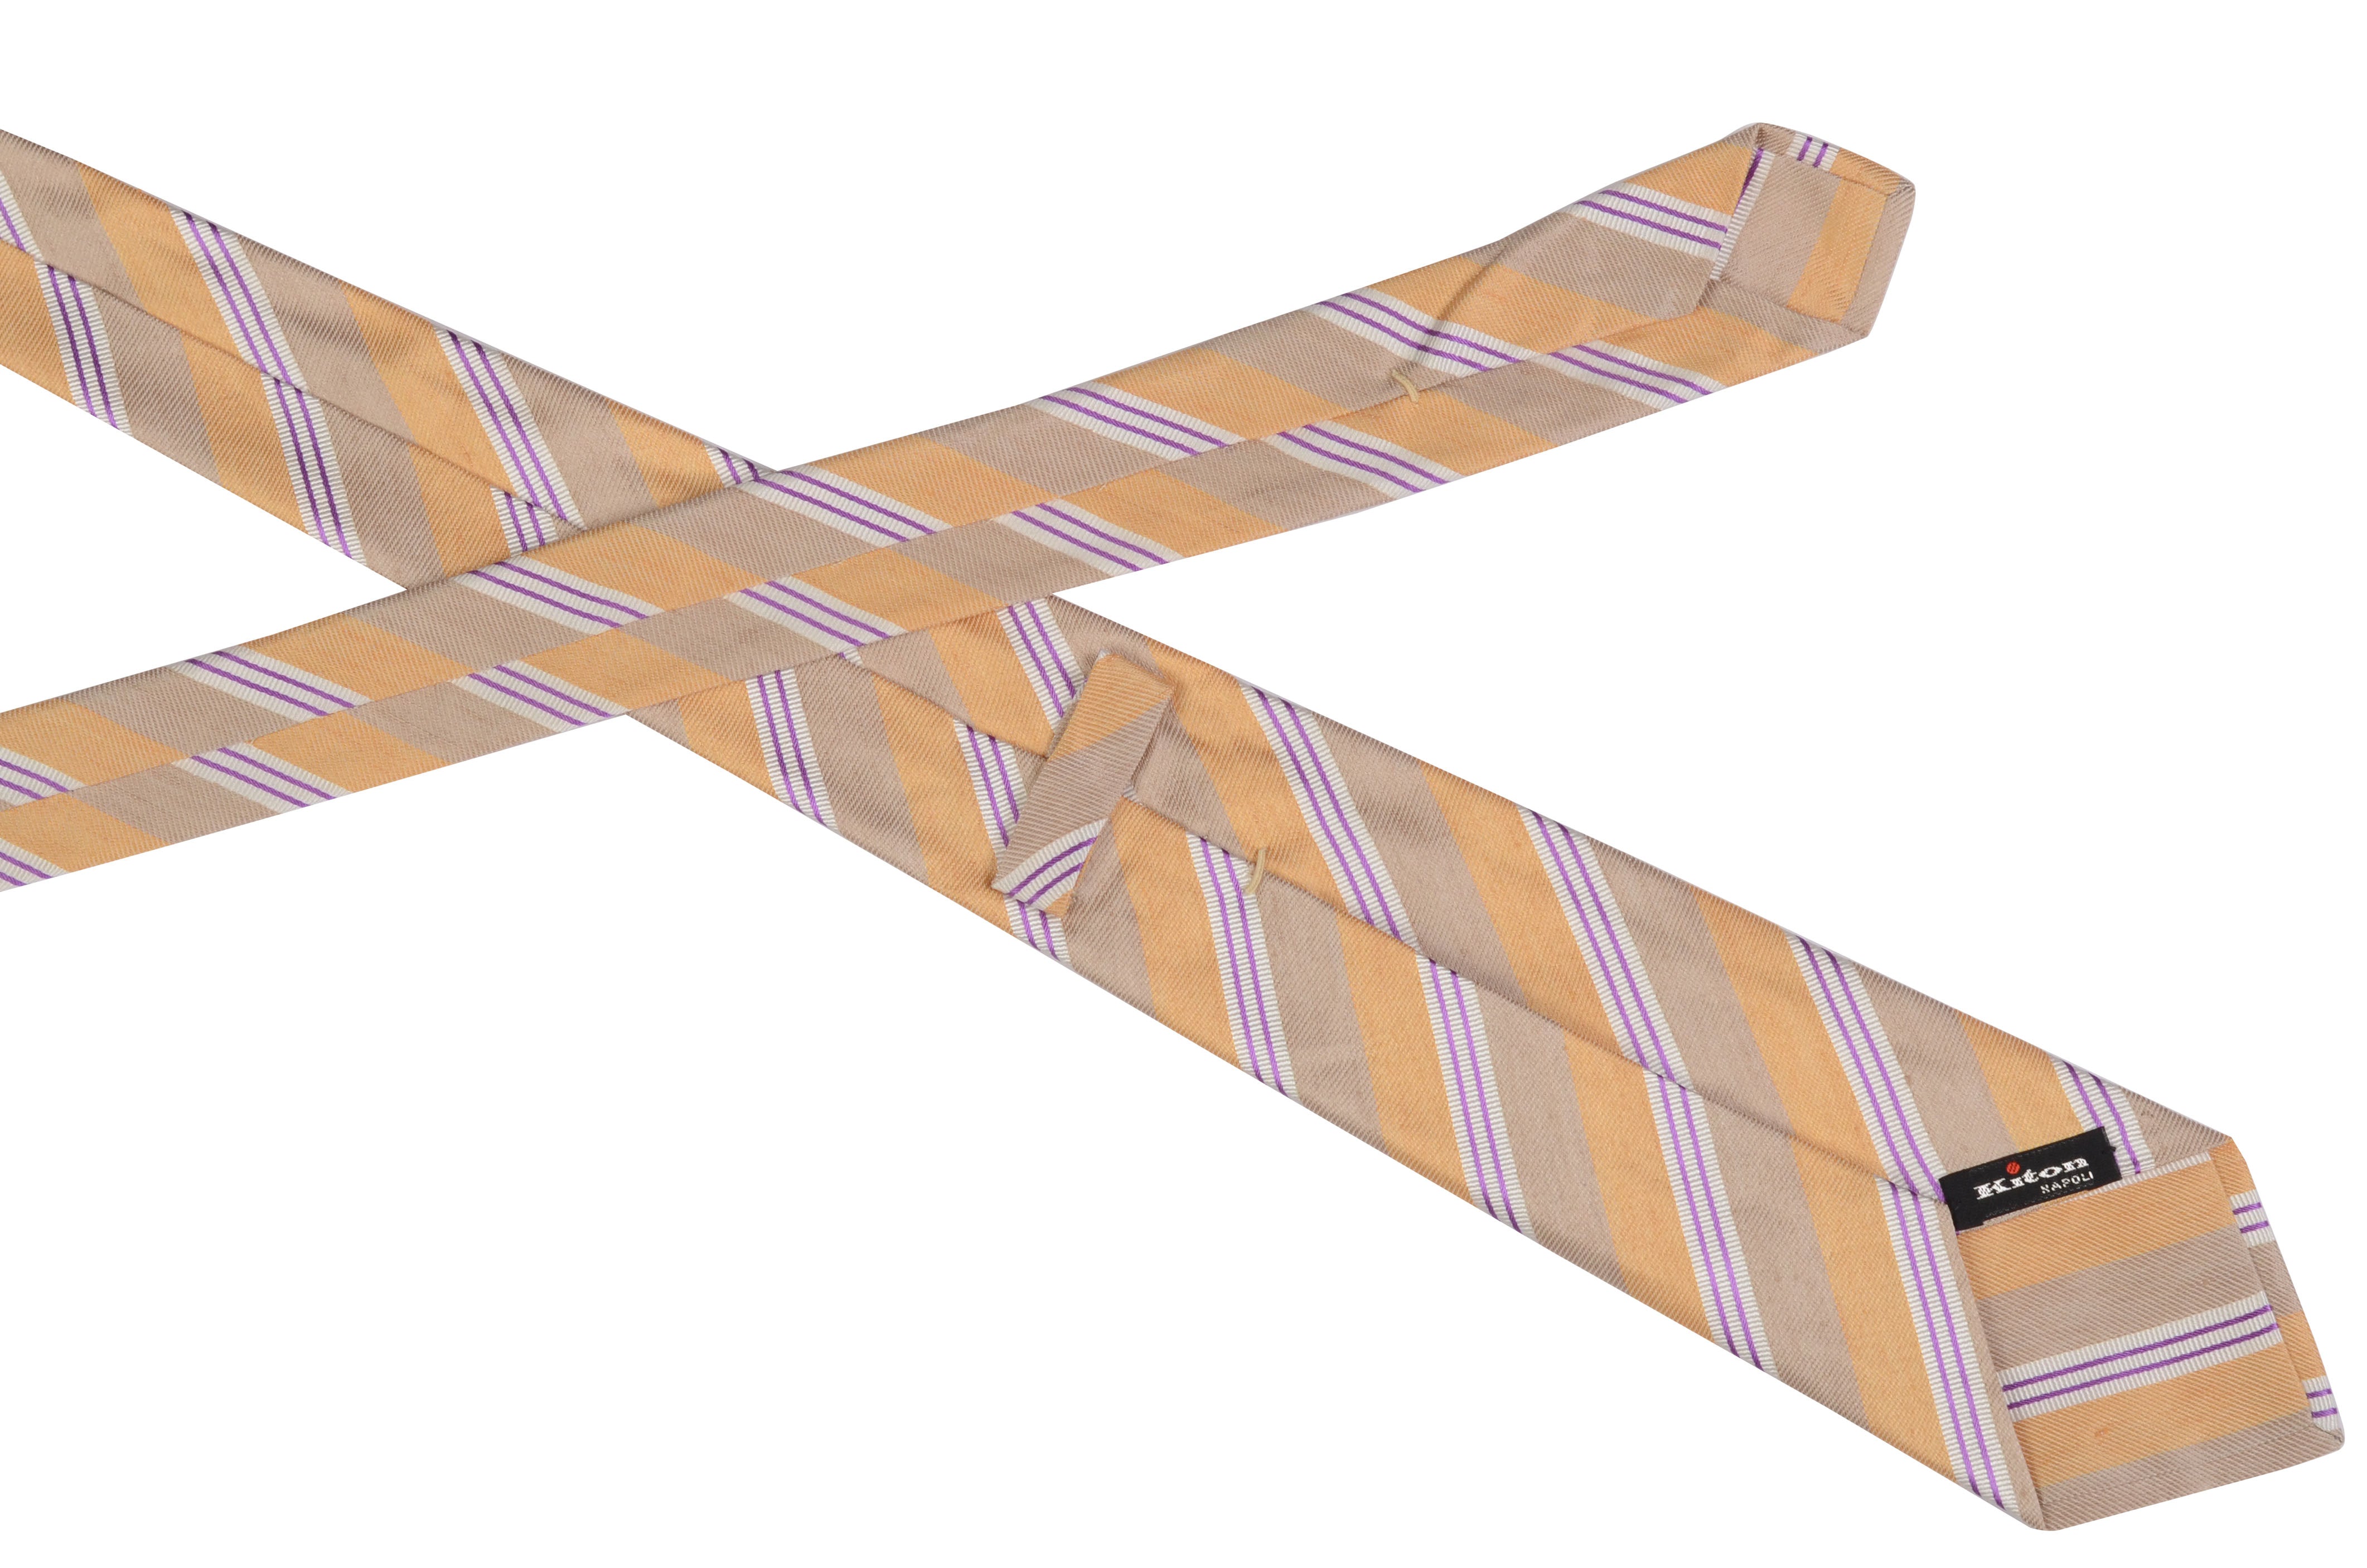 KITON Napoli Hand-Made Seven Fold Beige-Orange Striped Silk Tie NEW